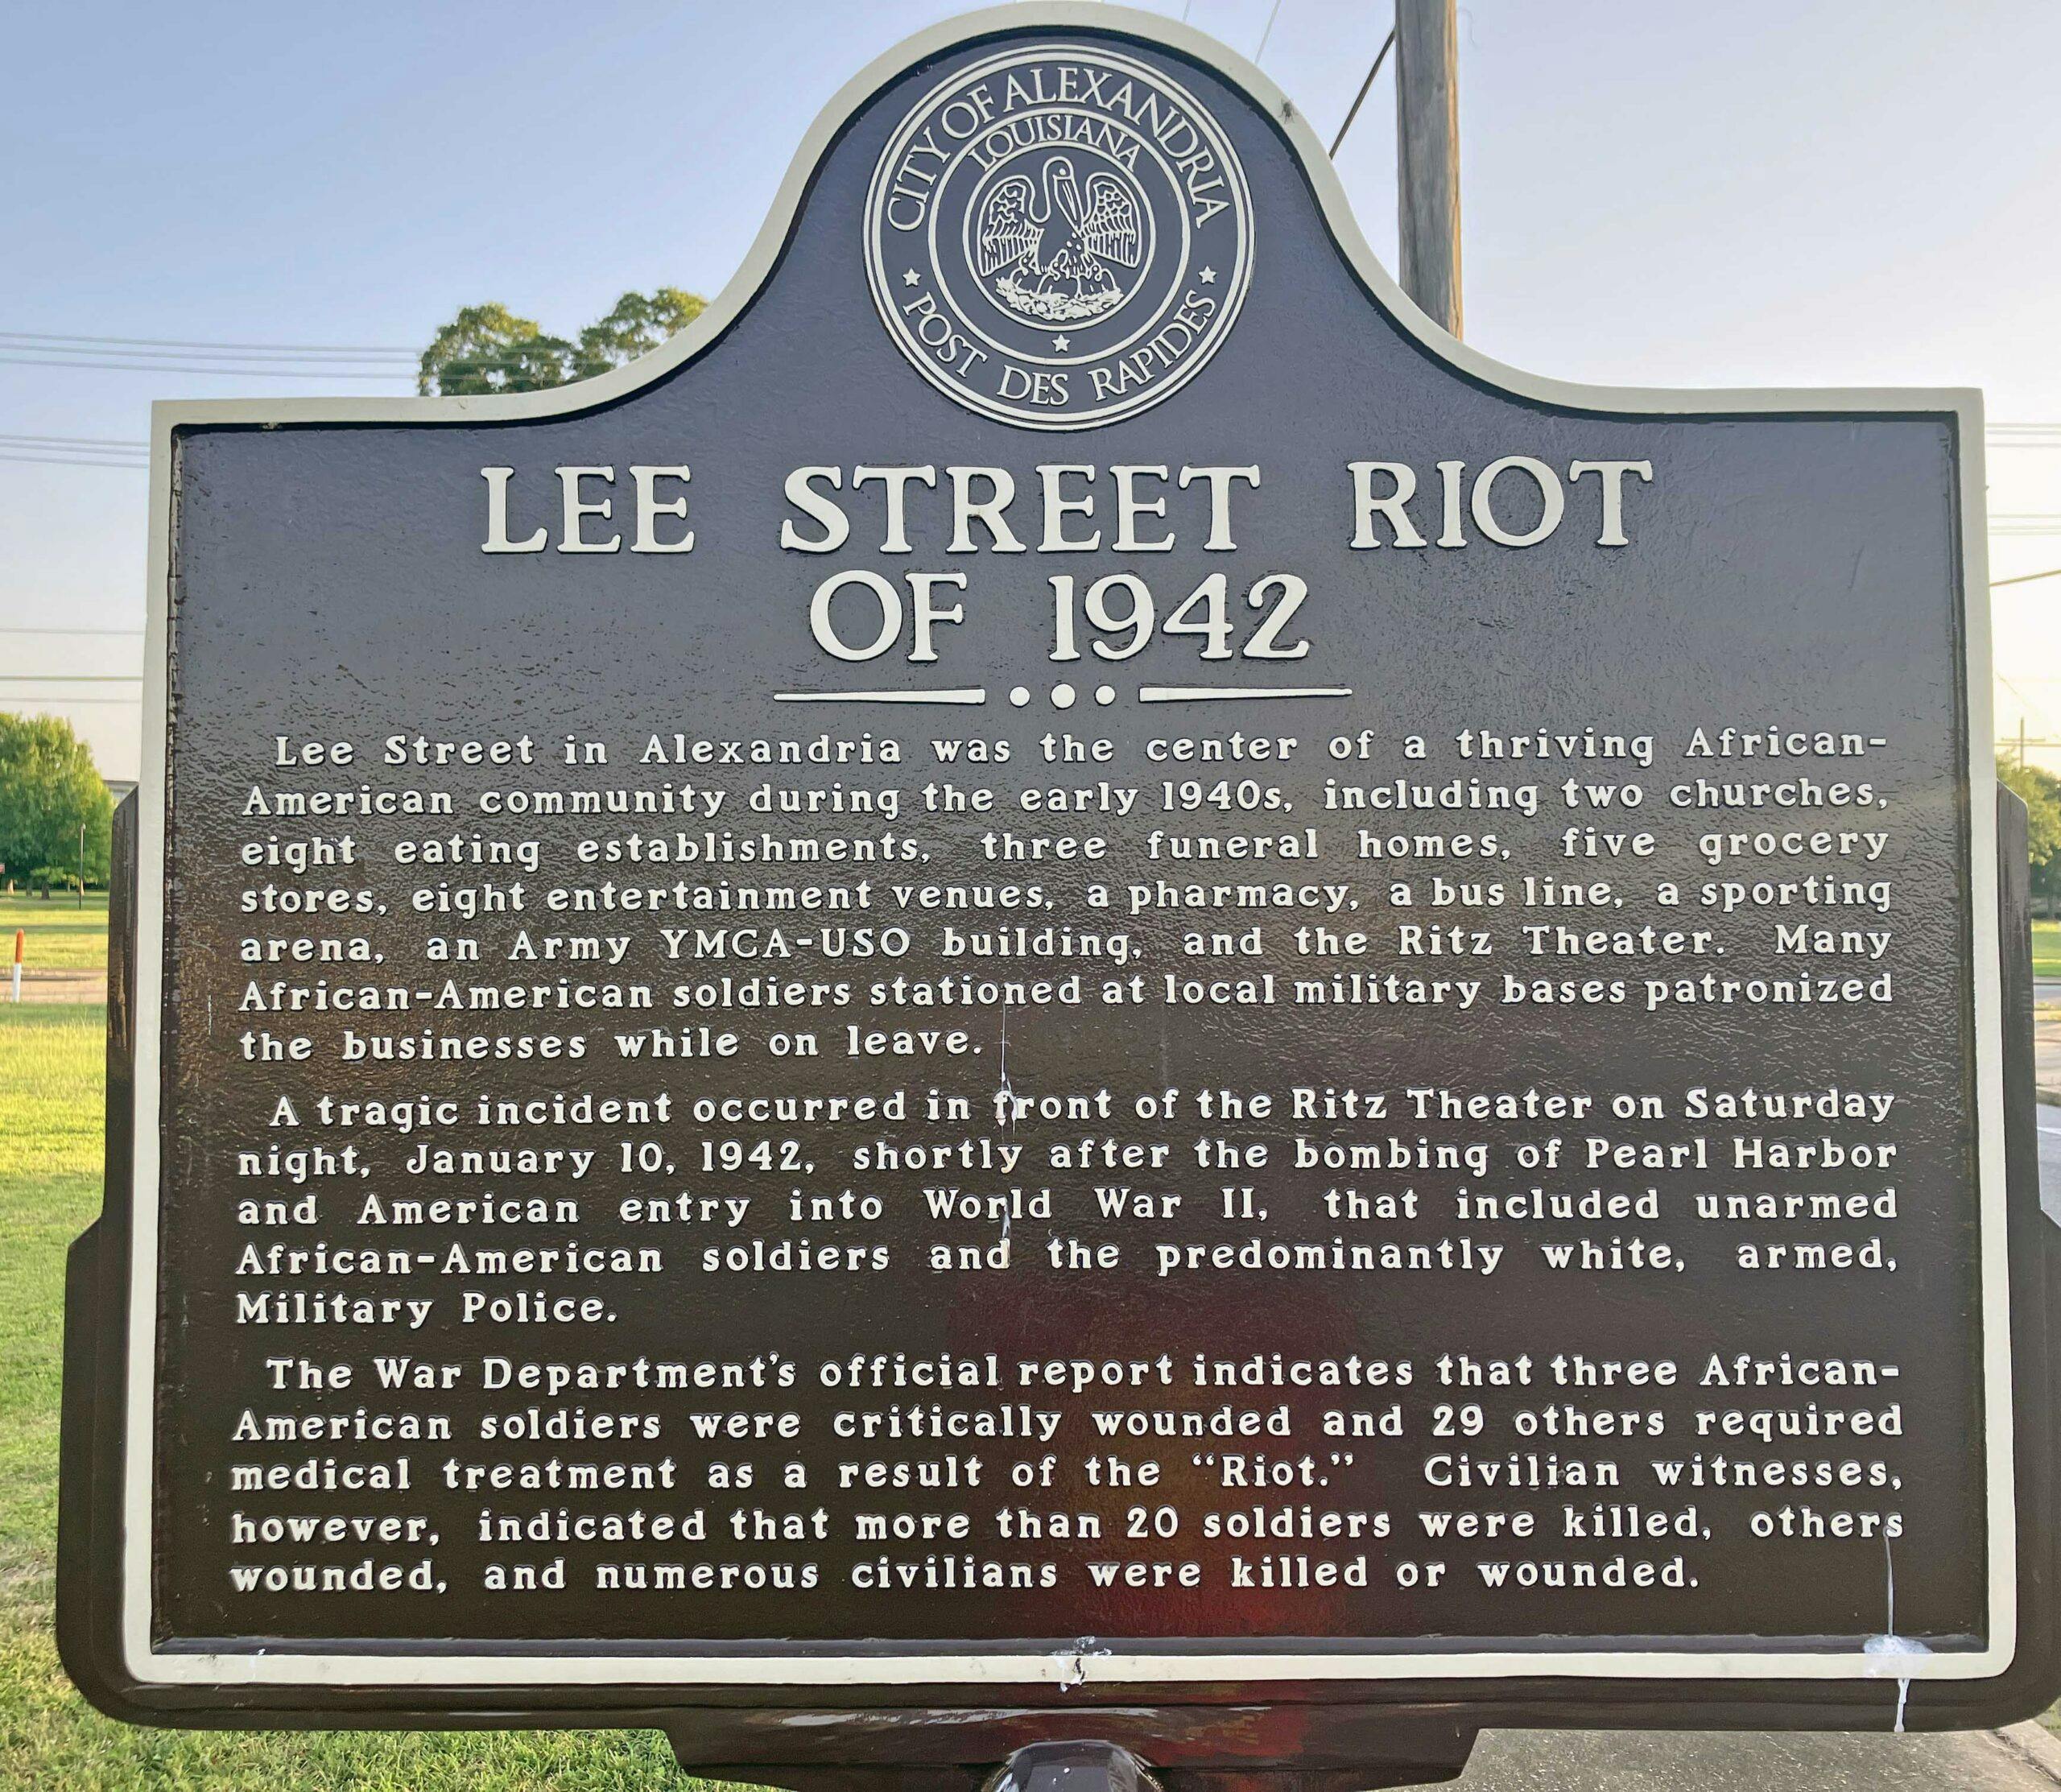 Lee Street Riot detail